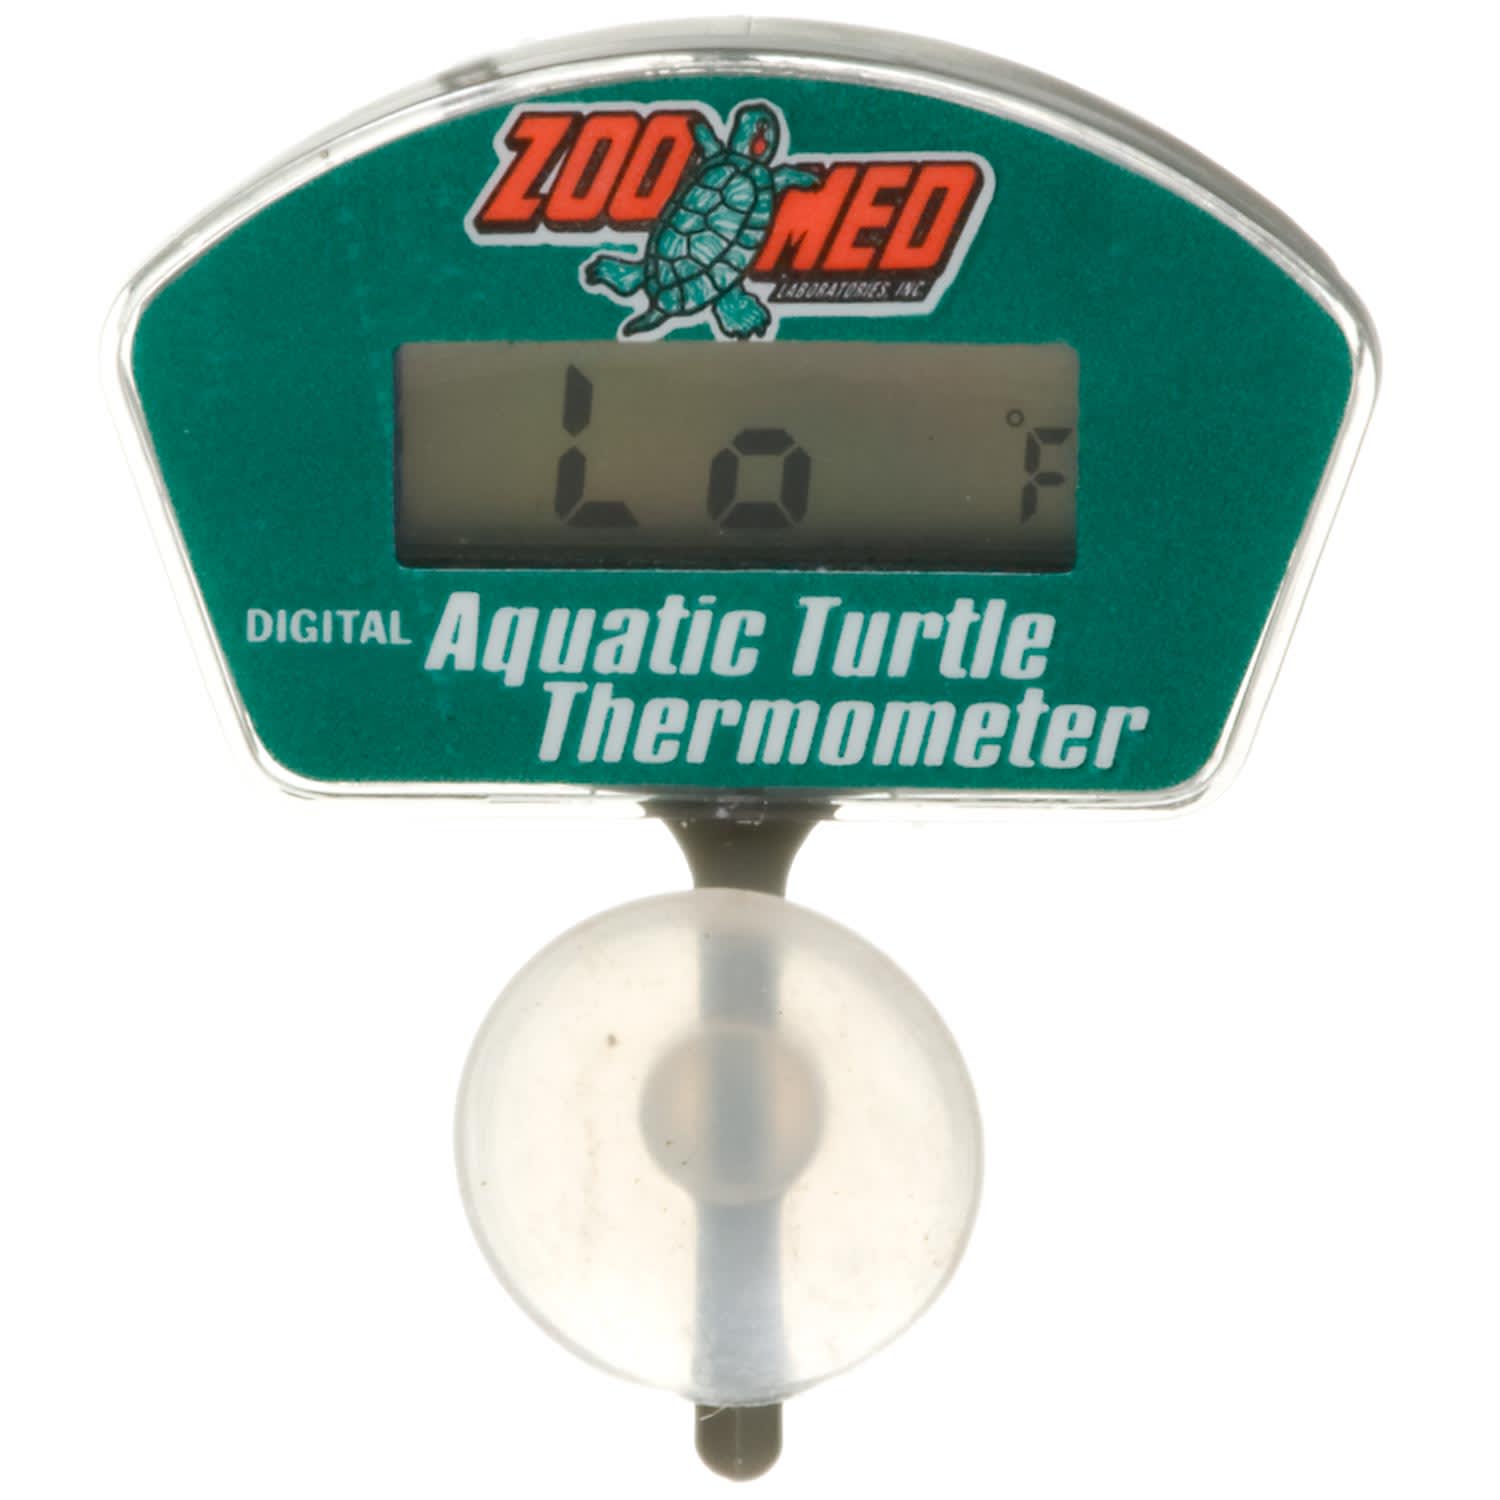 Digital Thermometer / Hygrometer - Lifegard Aquatics